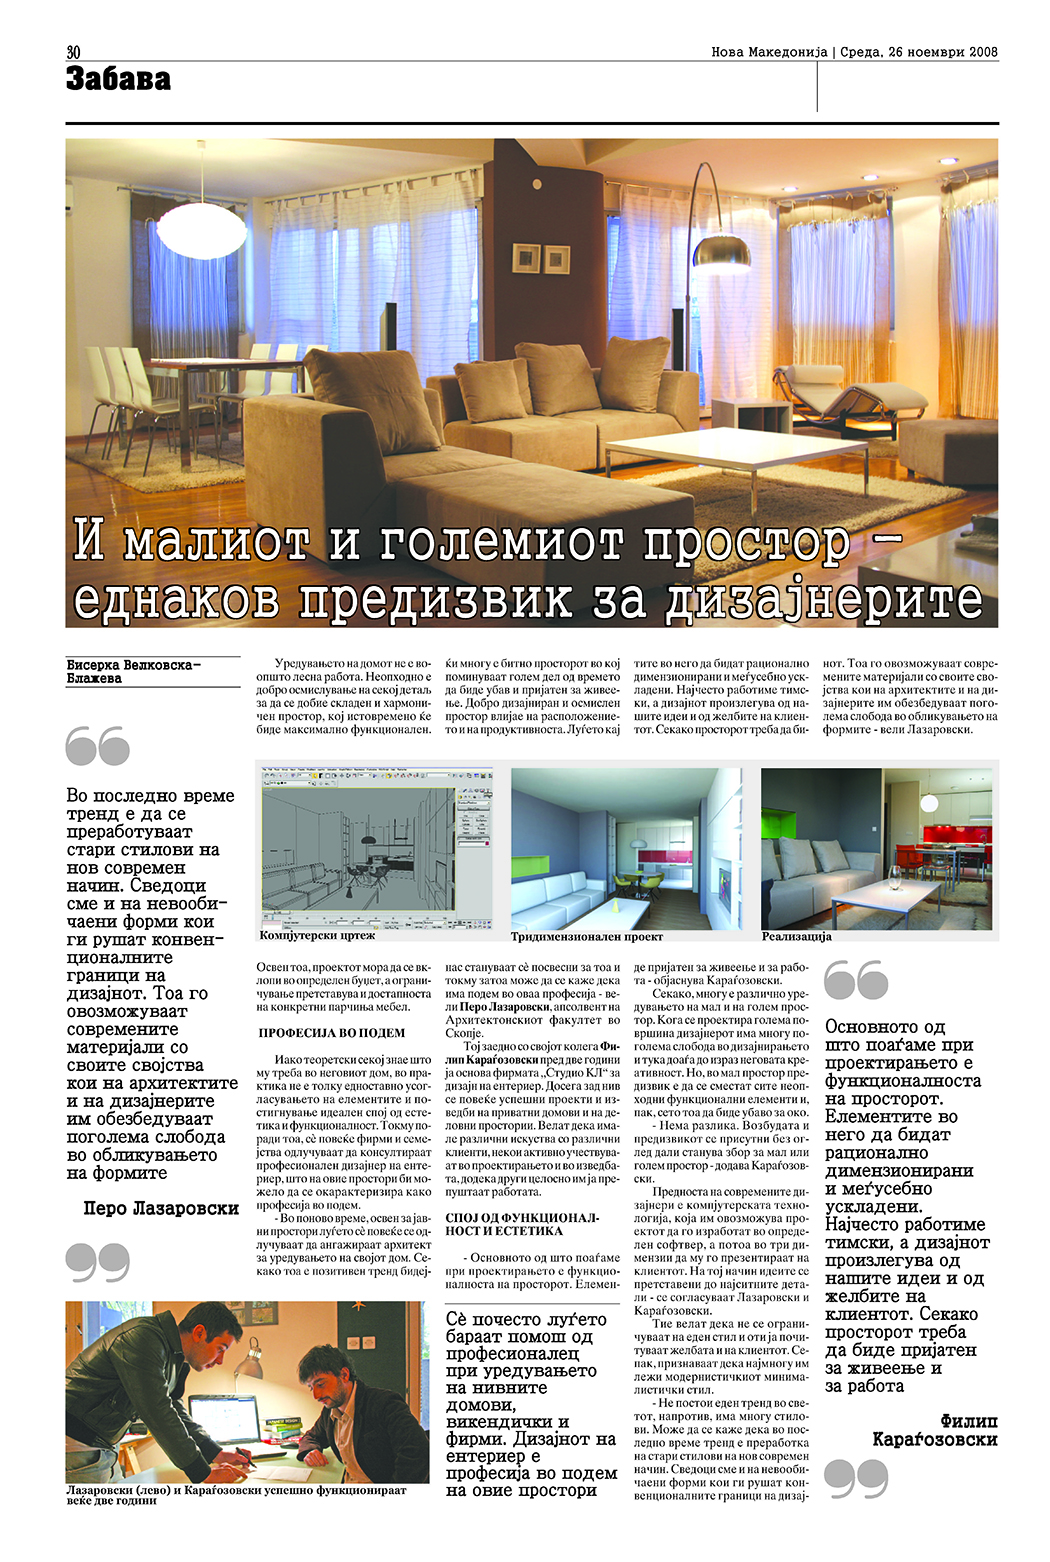 Interview for the daily news paper Nova Makedonija 26.10.2008